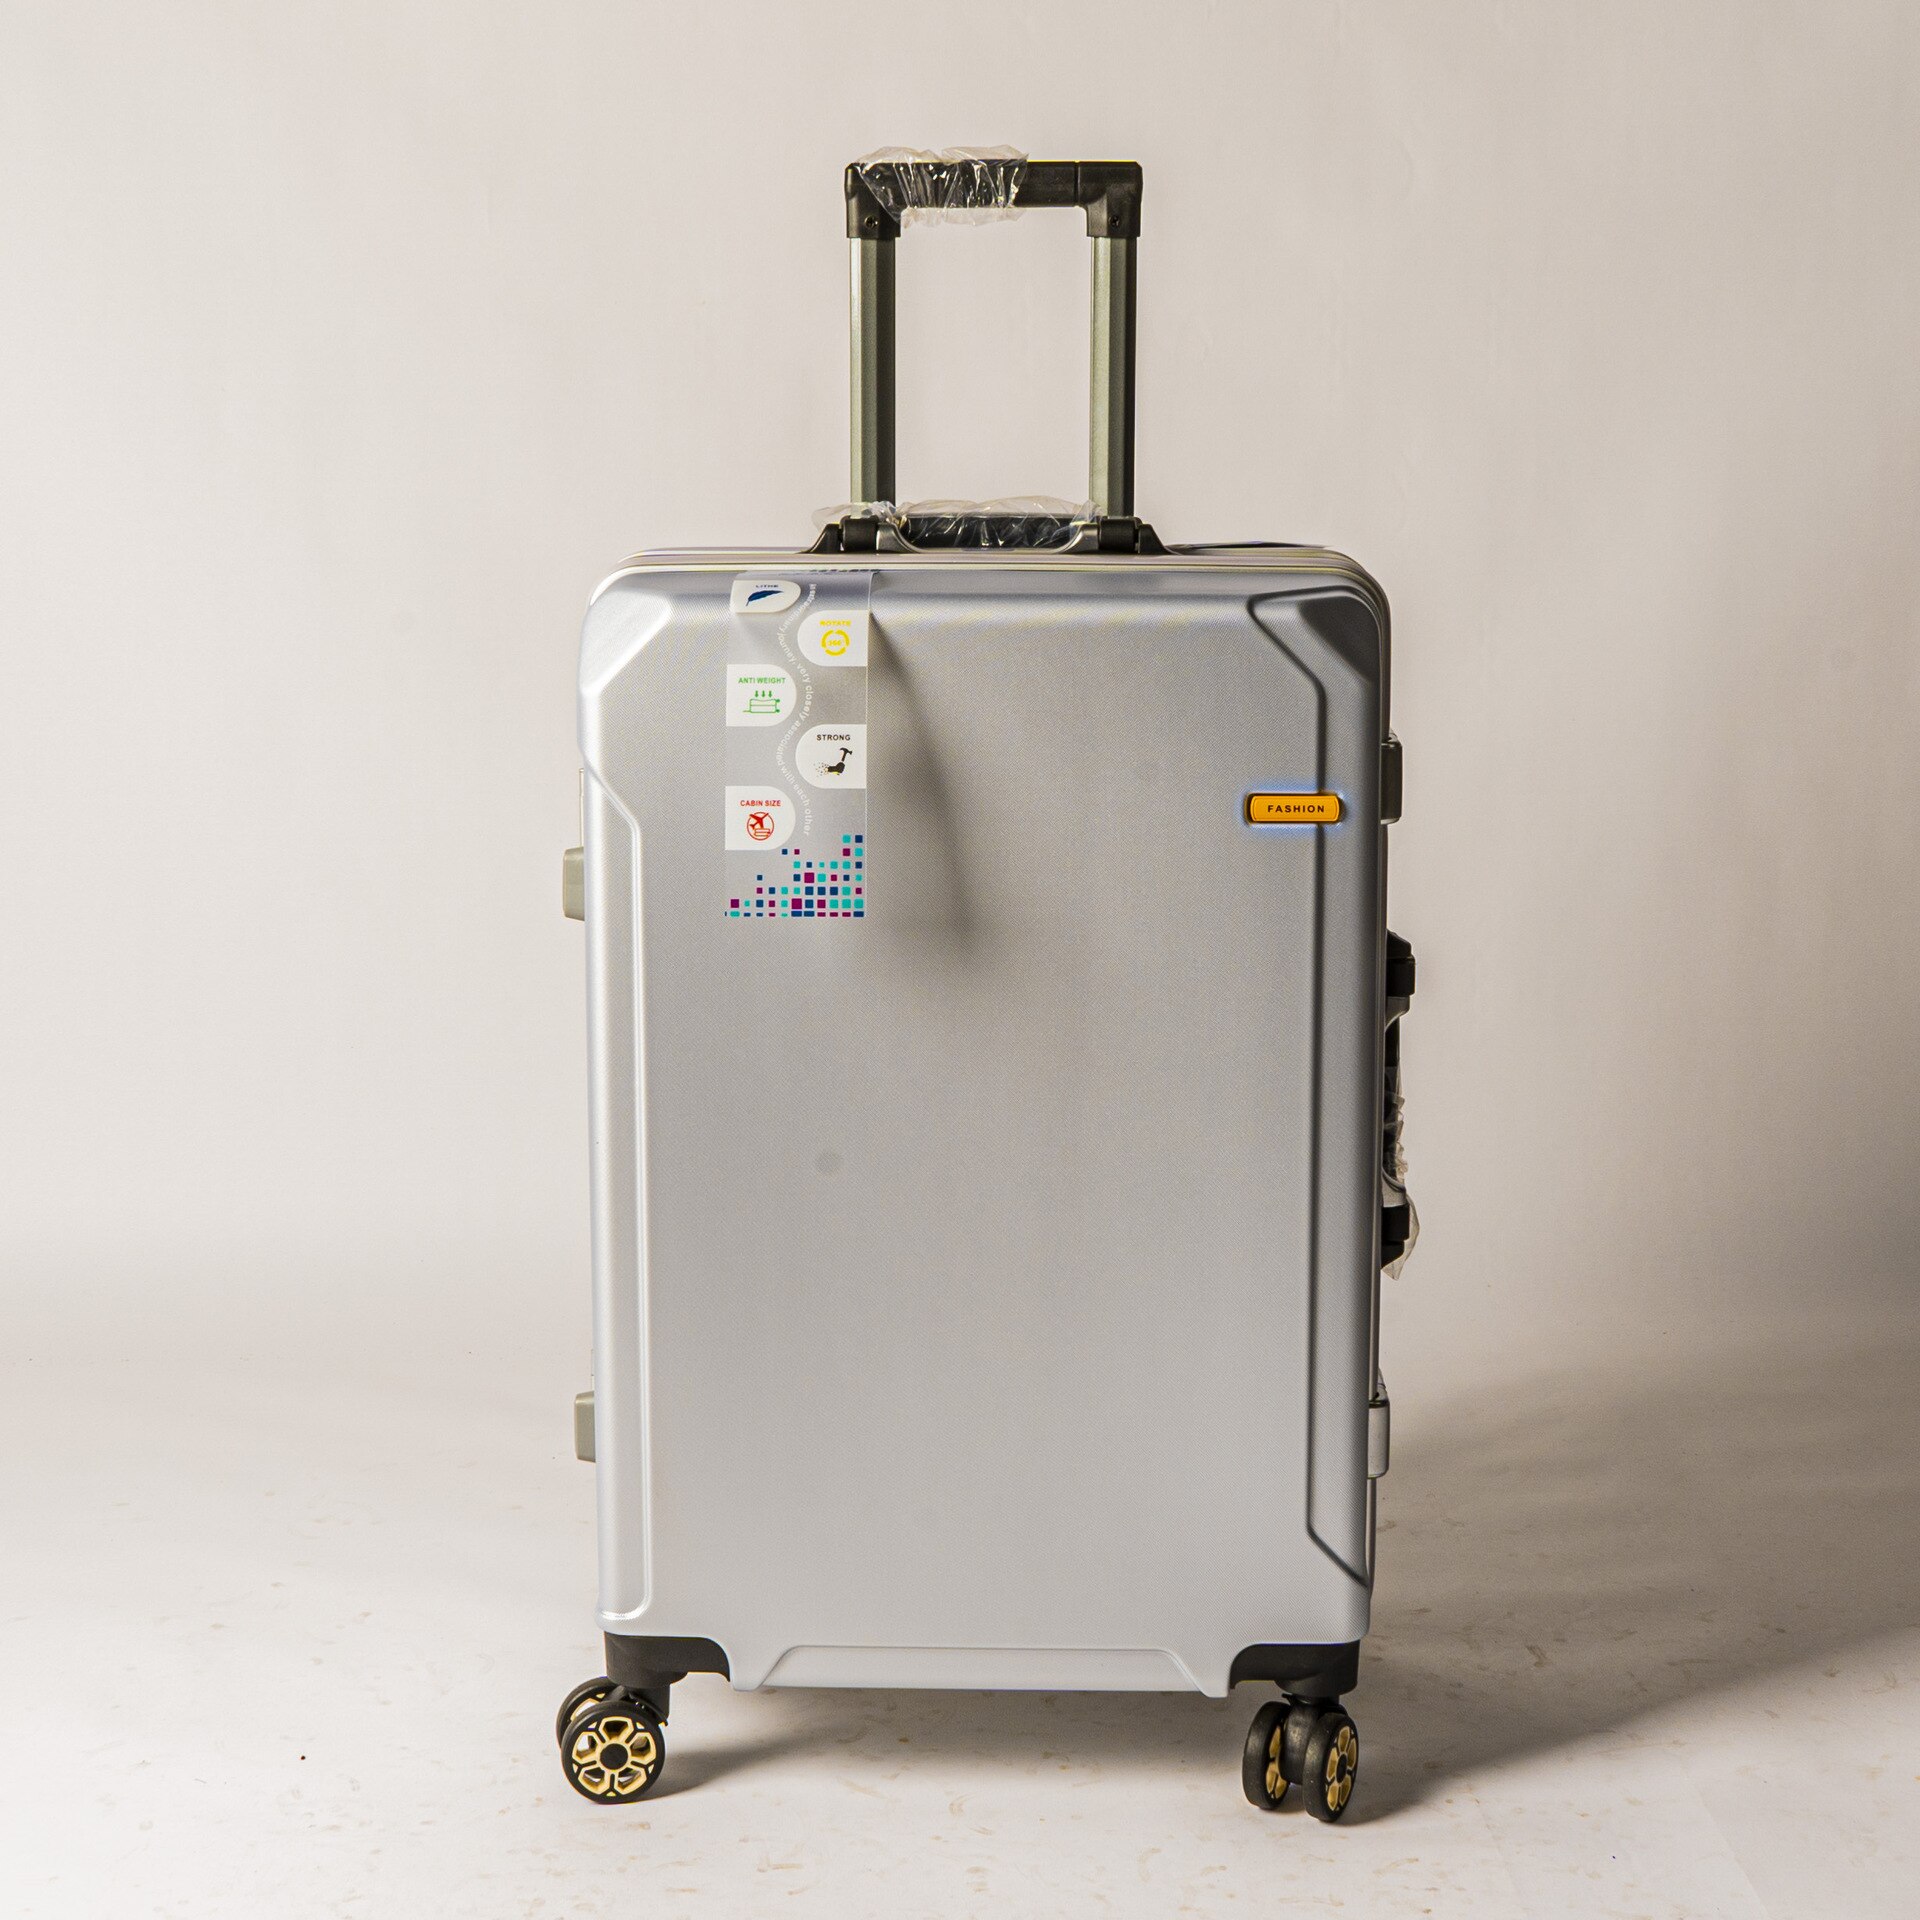 Den unisex aluminiumsramme vognkasse kabinetaske kuffert kuffert på forretningsrejse stewardess kuffert